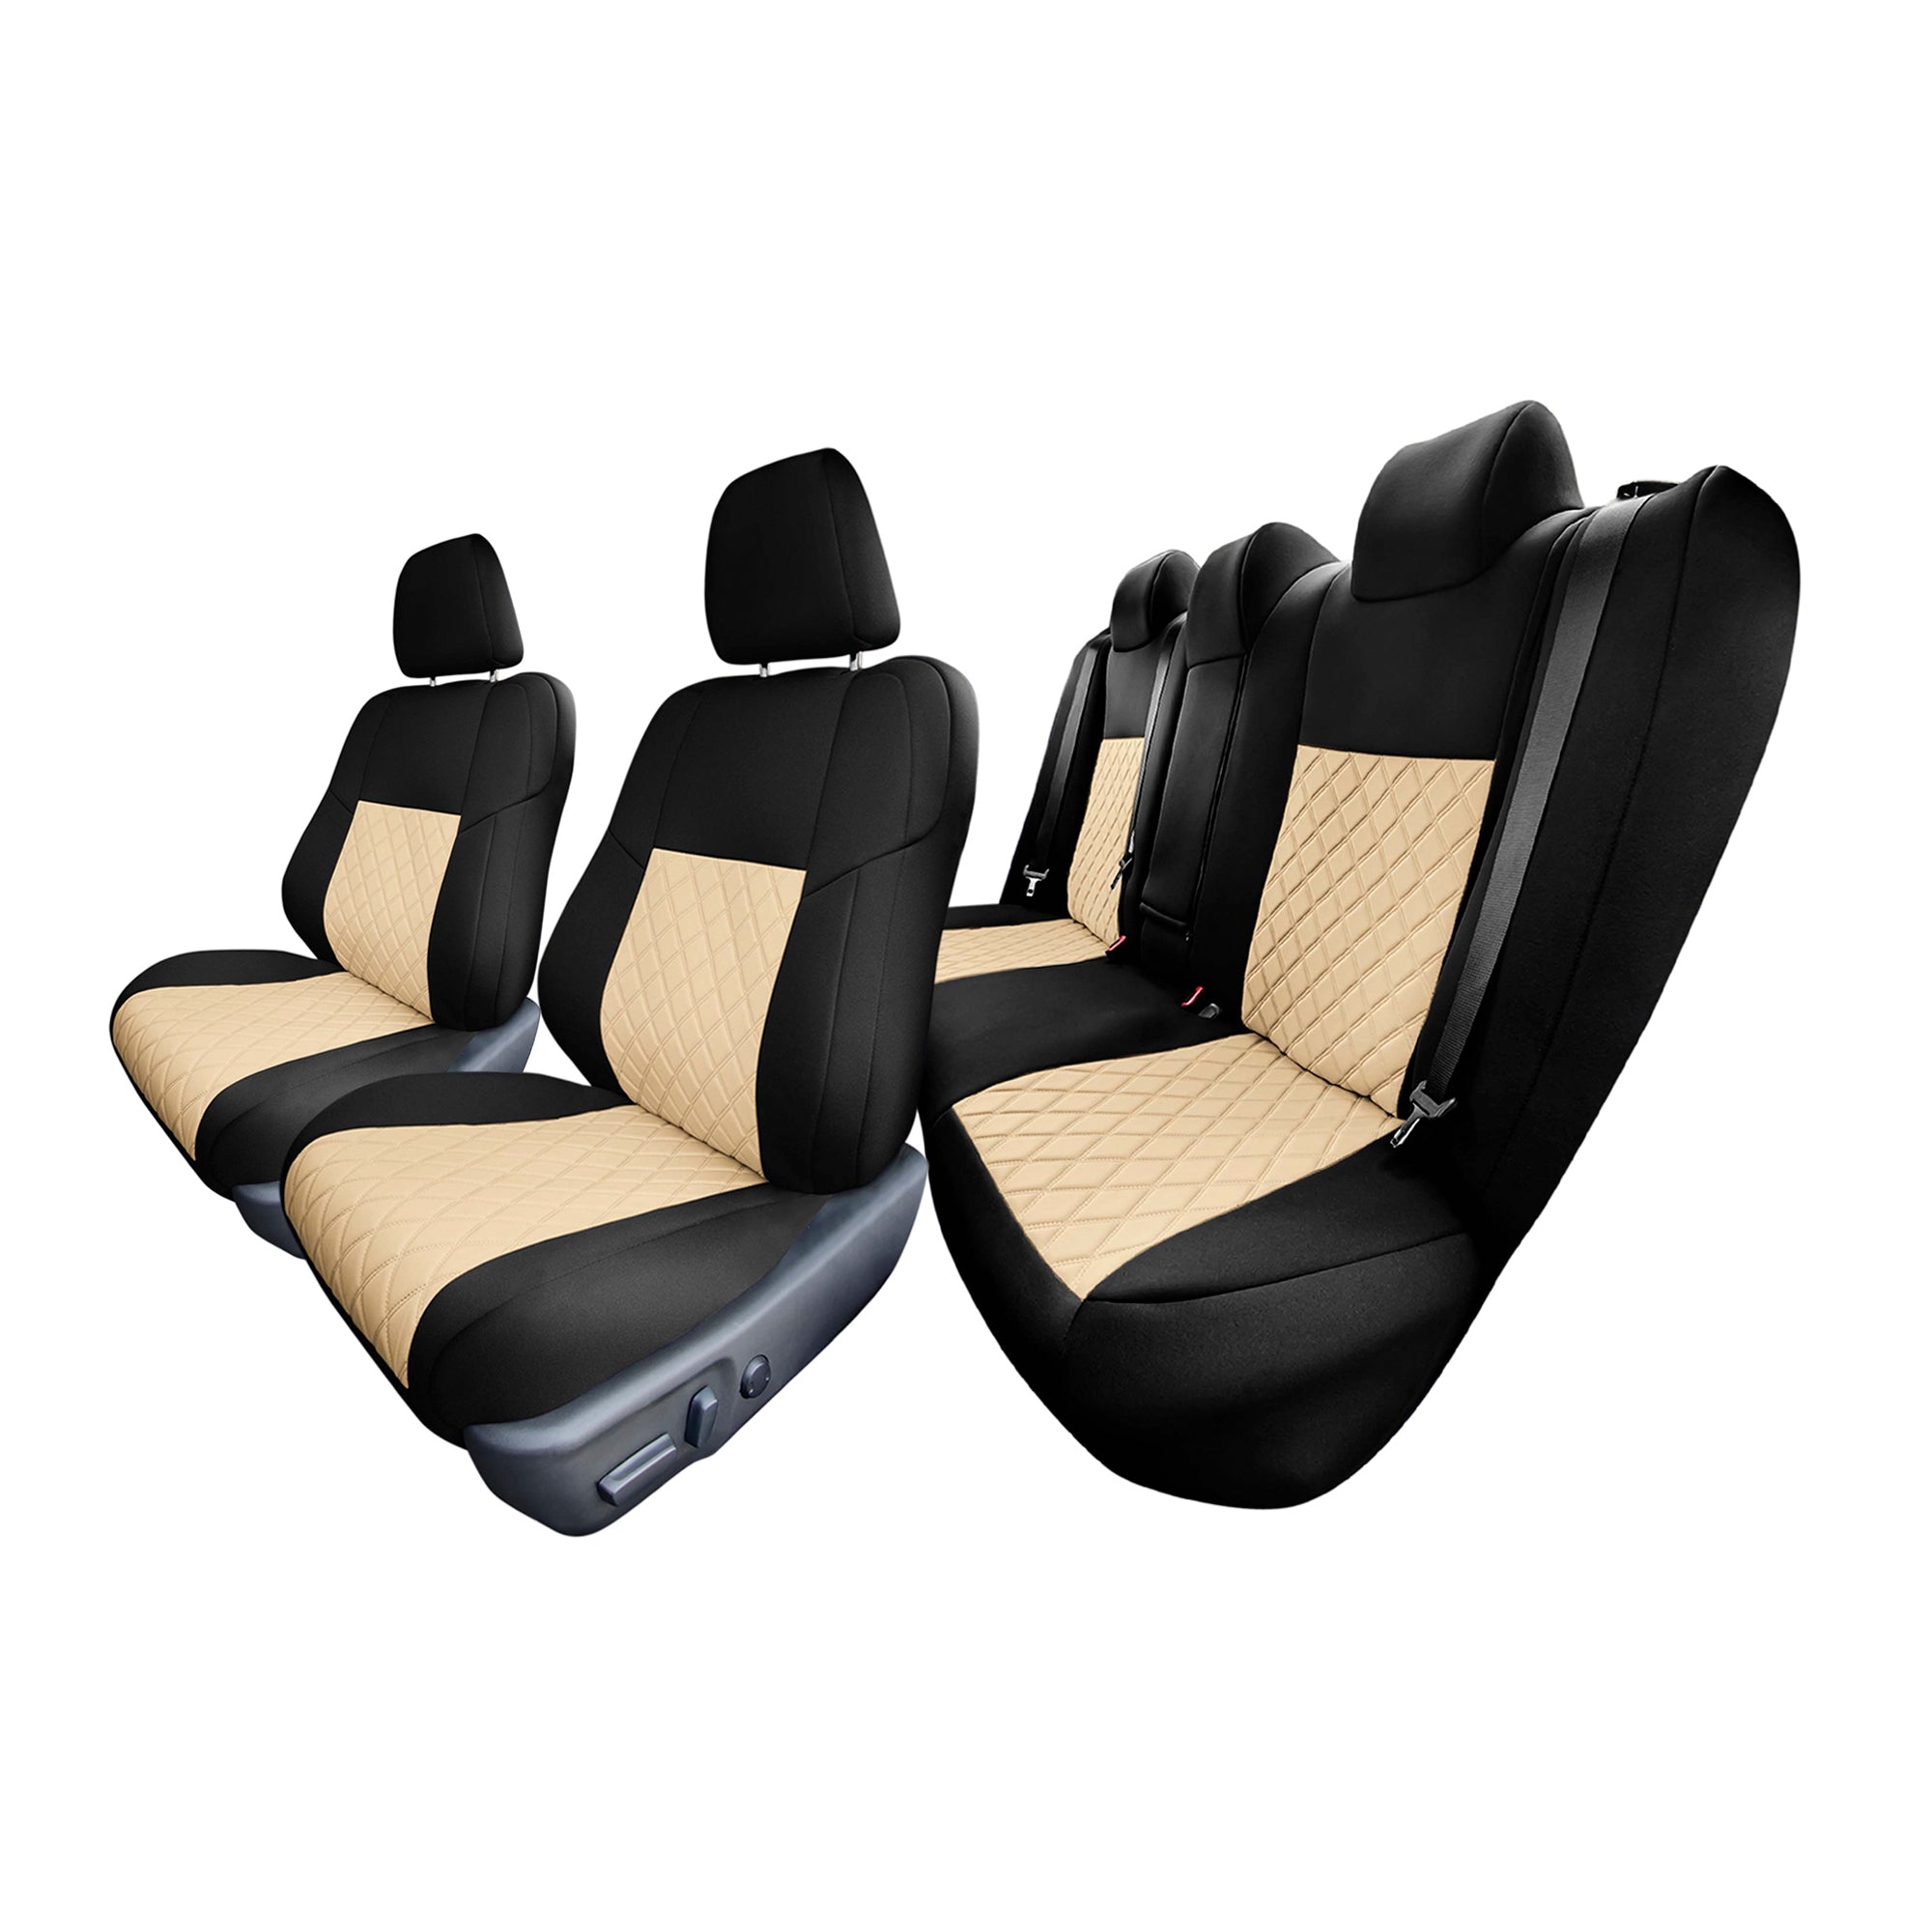 Toyota Camry LE | SE | XSE | XLE  2012-2017 - Full Set Seat Covers - Beige Ultraflex Neoprene